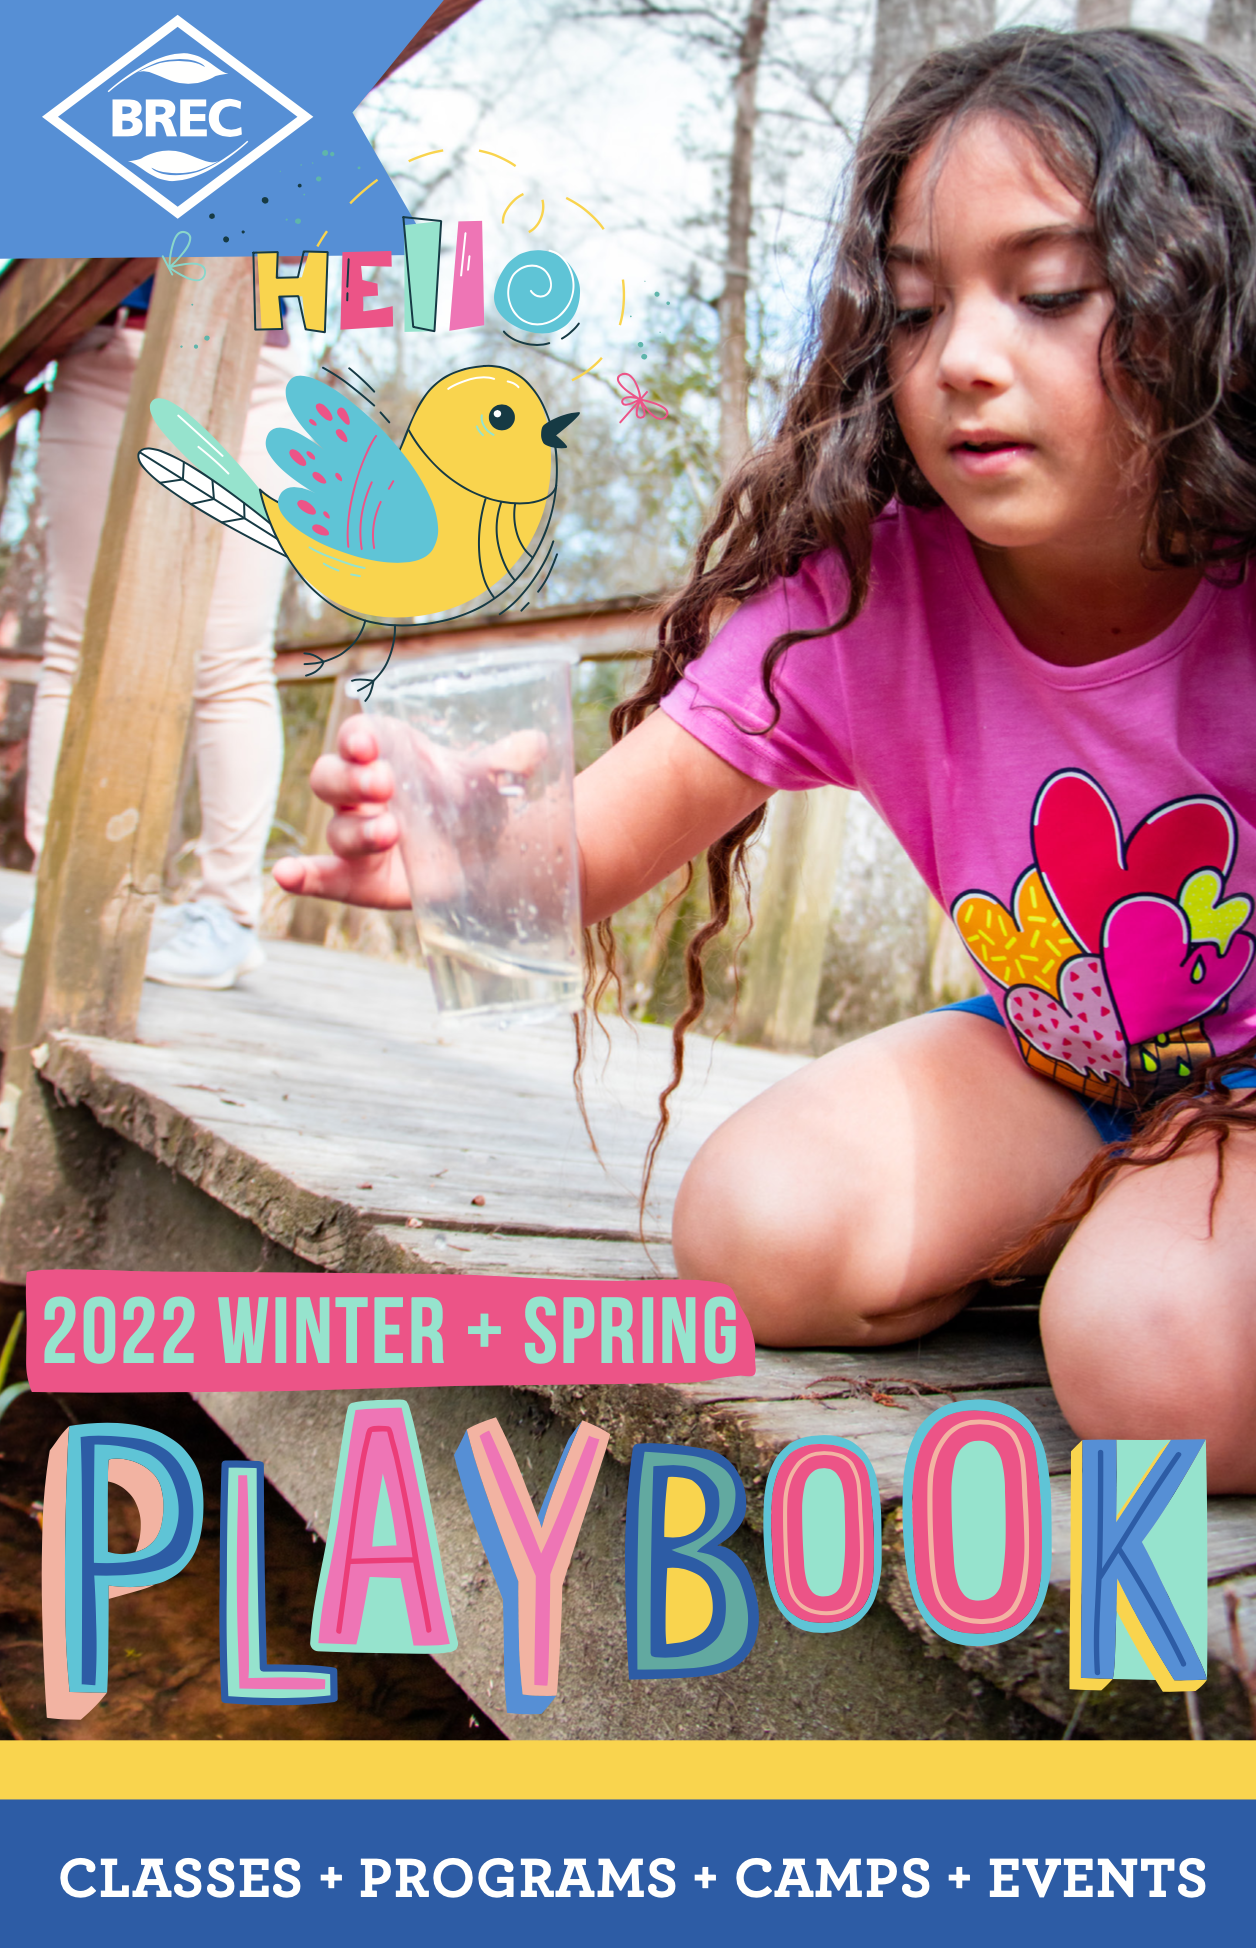 2022 Spring & Summer Playbook